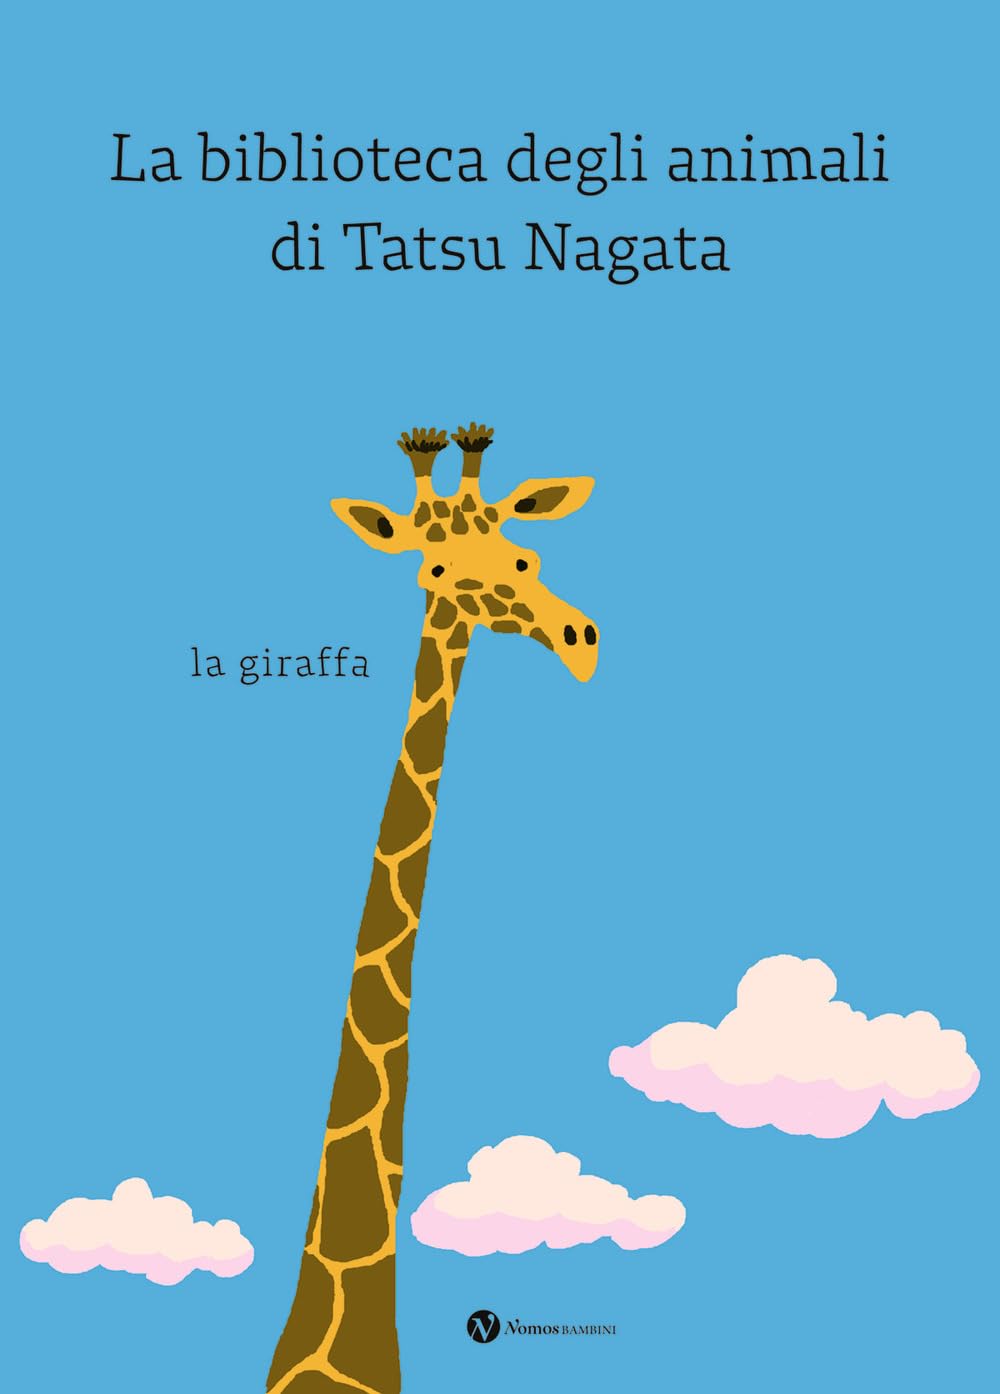 La biblioteca degli animali di Tatsu Nagata - La giraffa